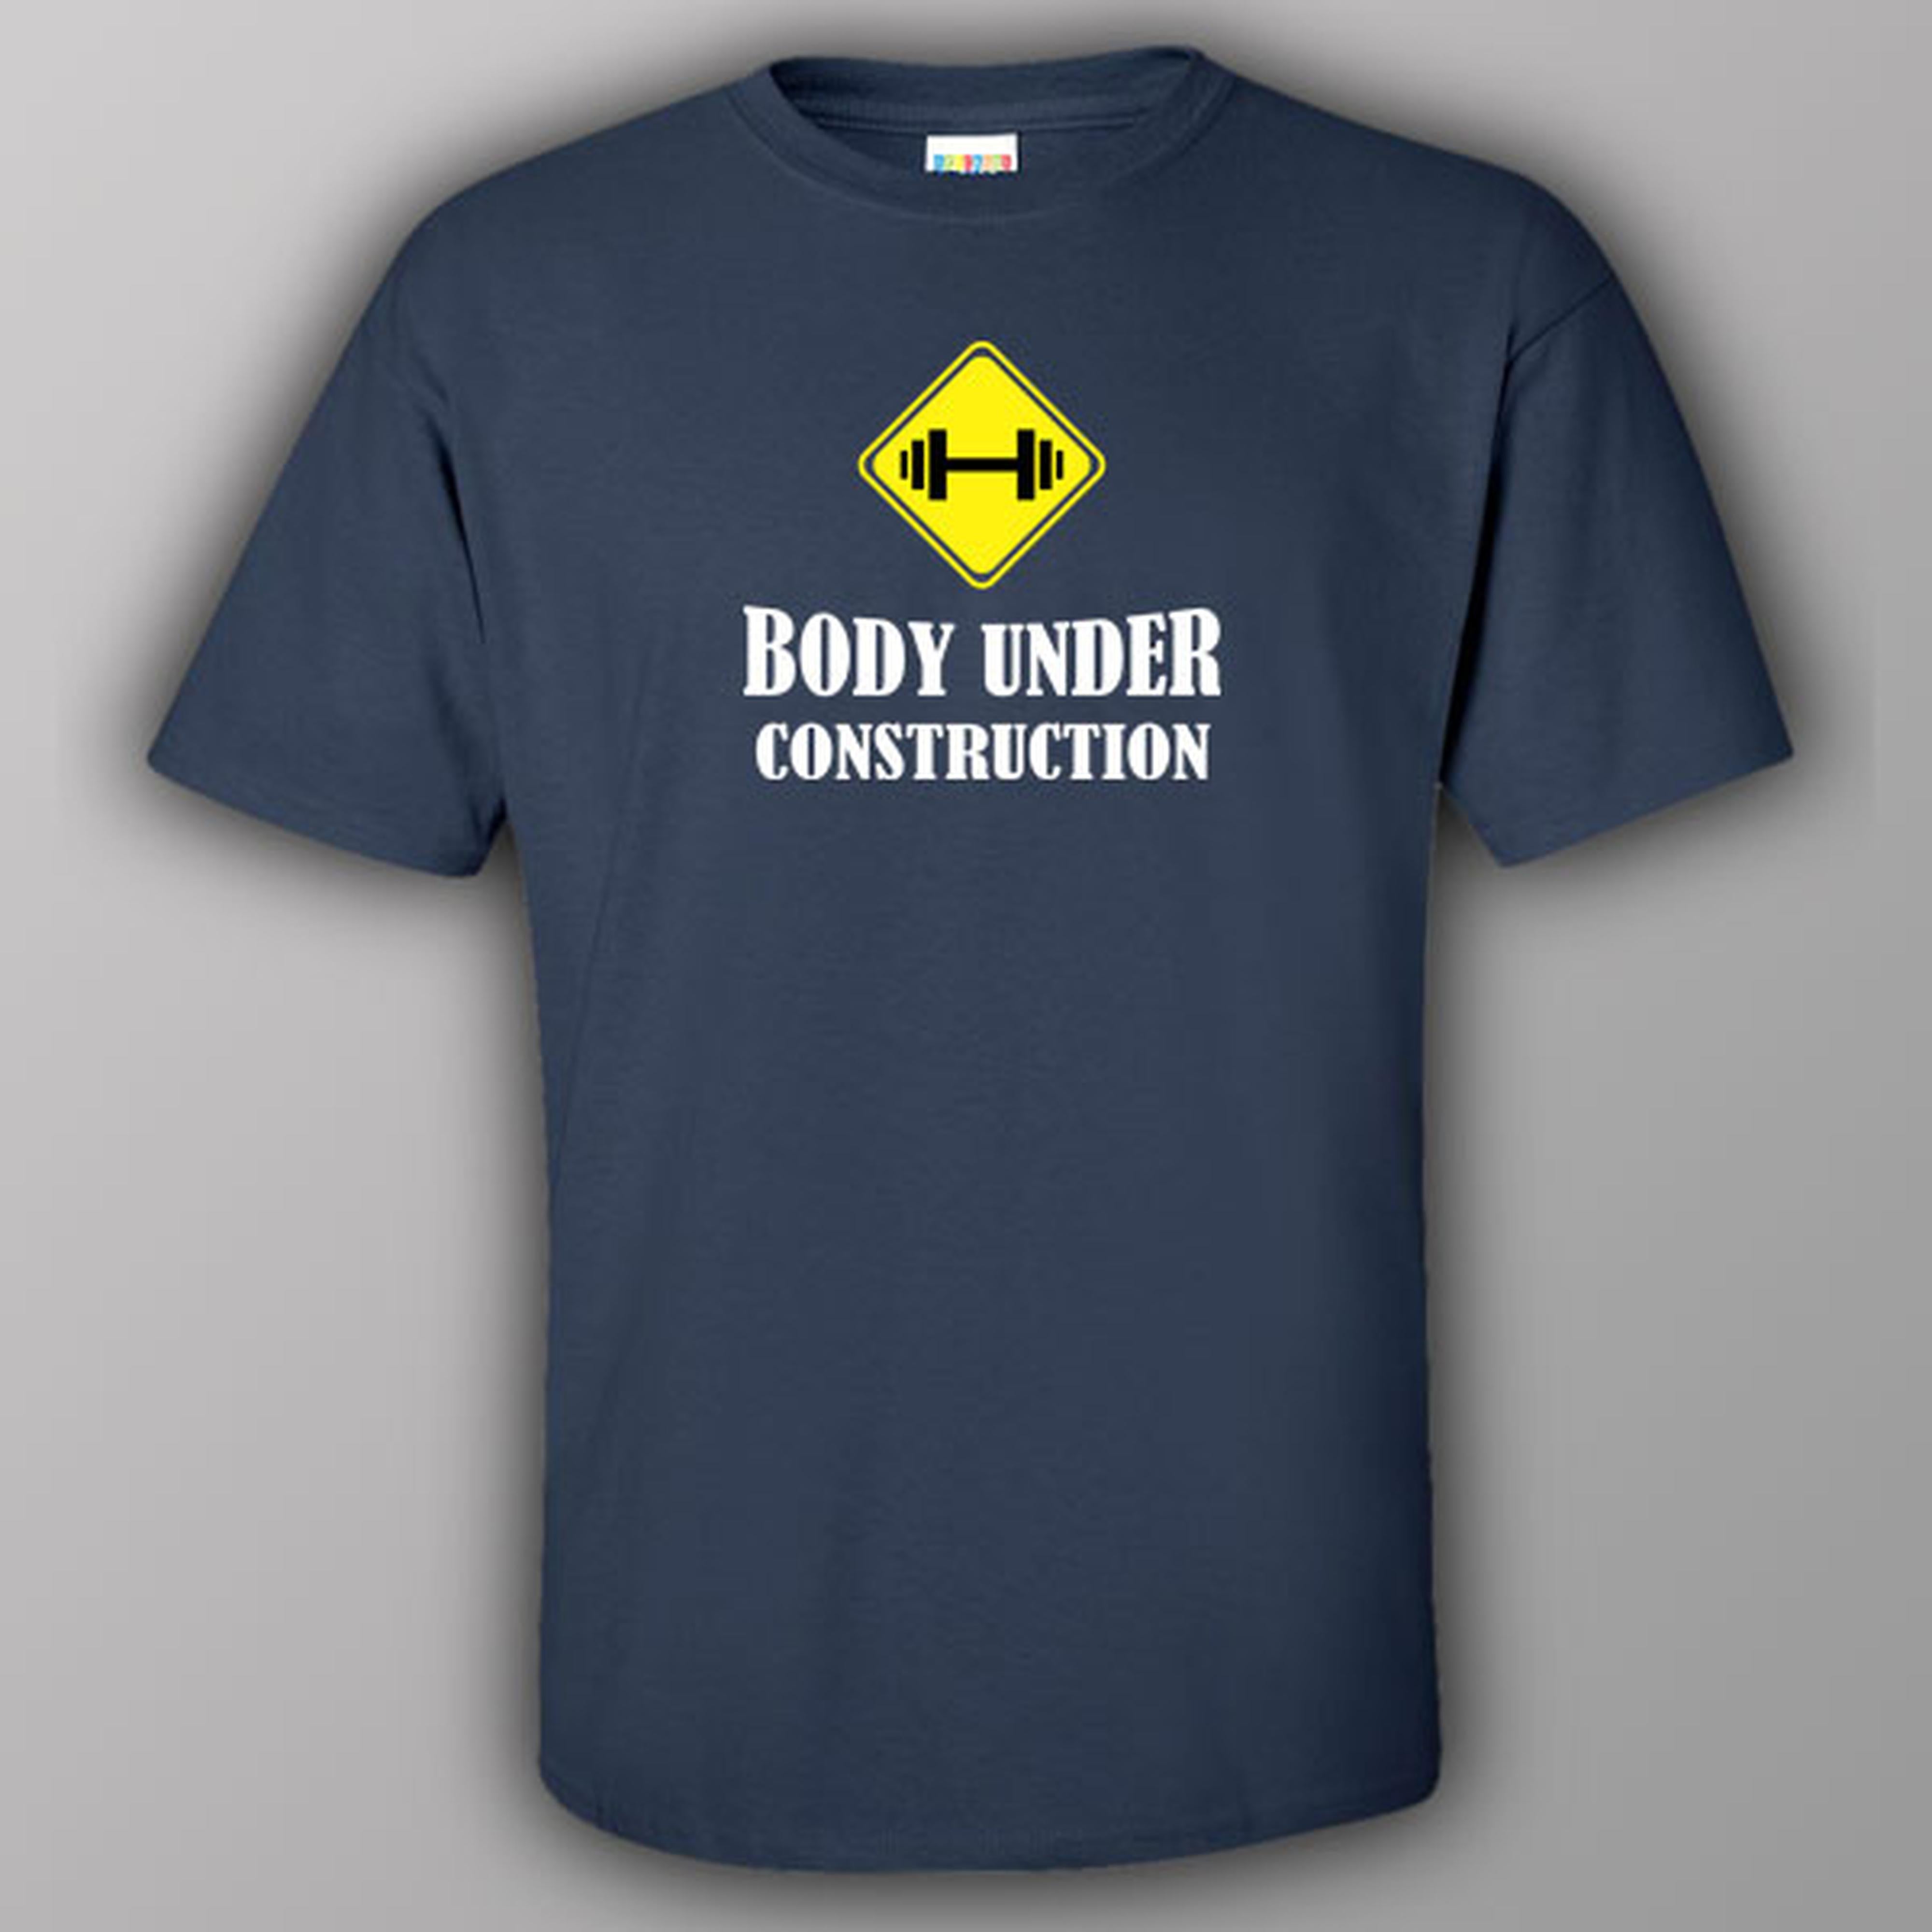 Body under construction - T-shirt